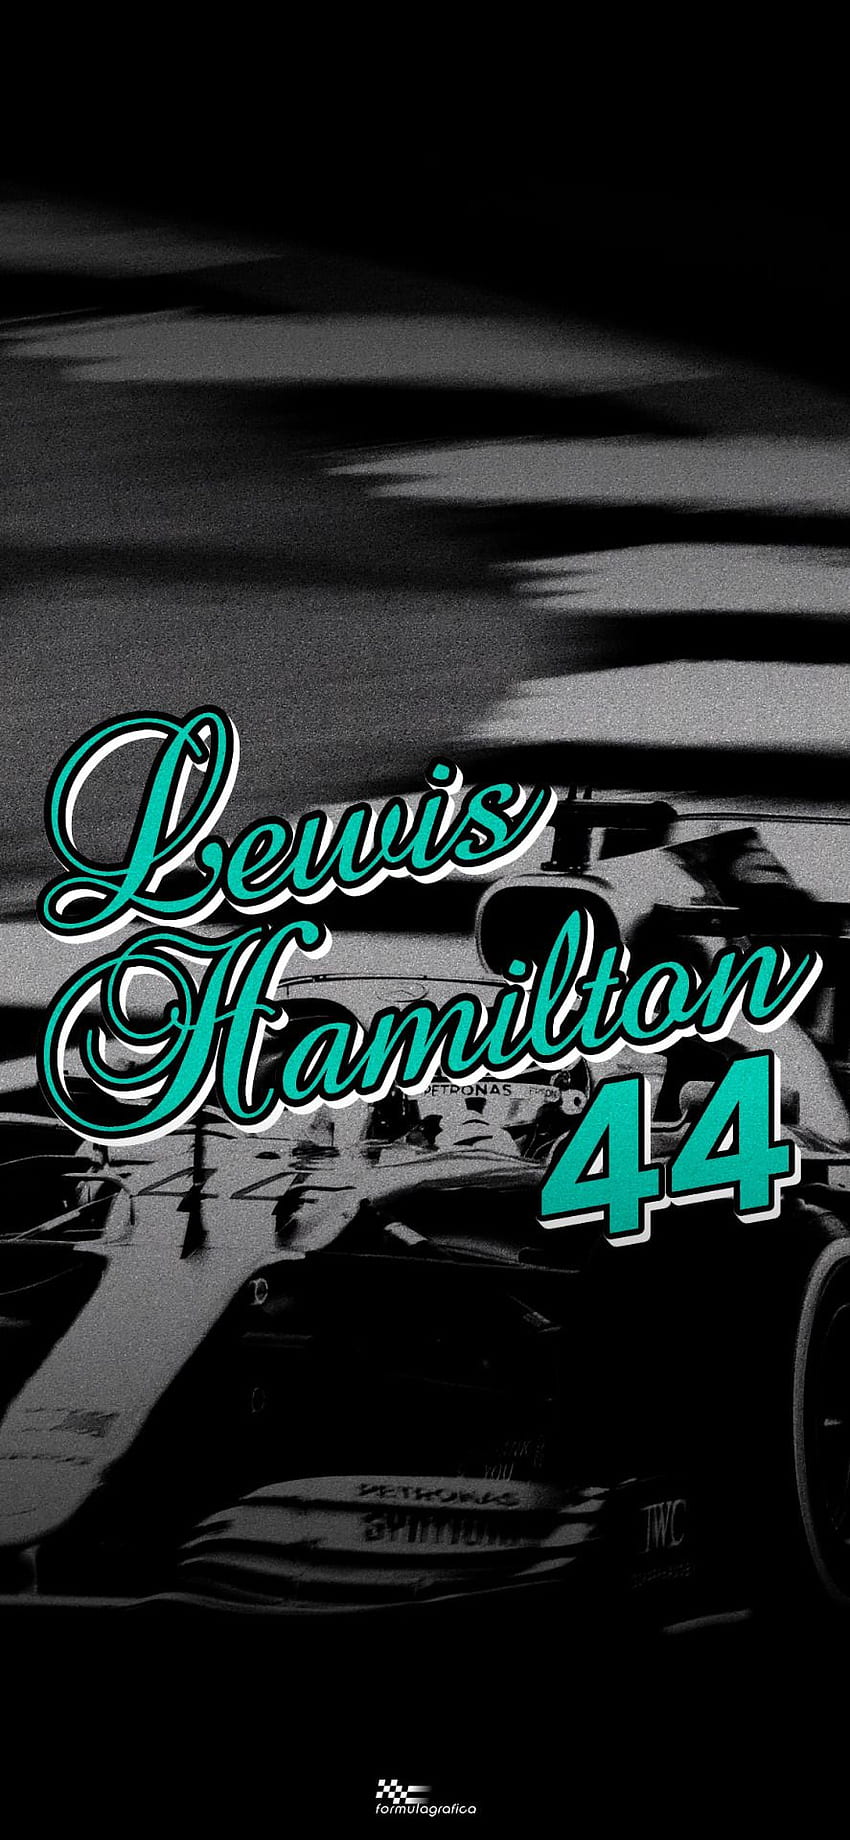 FormulaGrafica - iPhone / Smartphone - 2019 Formula 1, Lewis Hamilton HD phone wallpaper